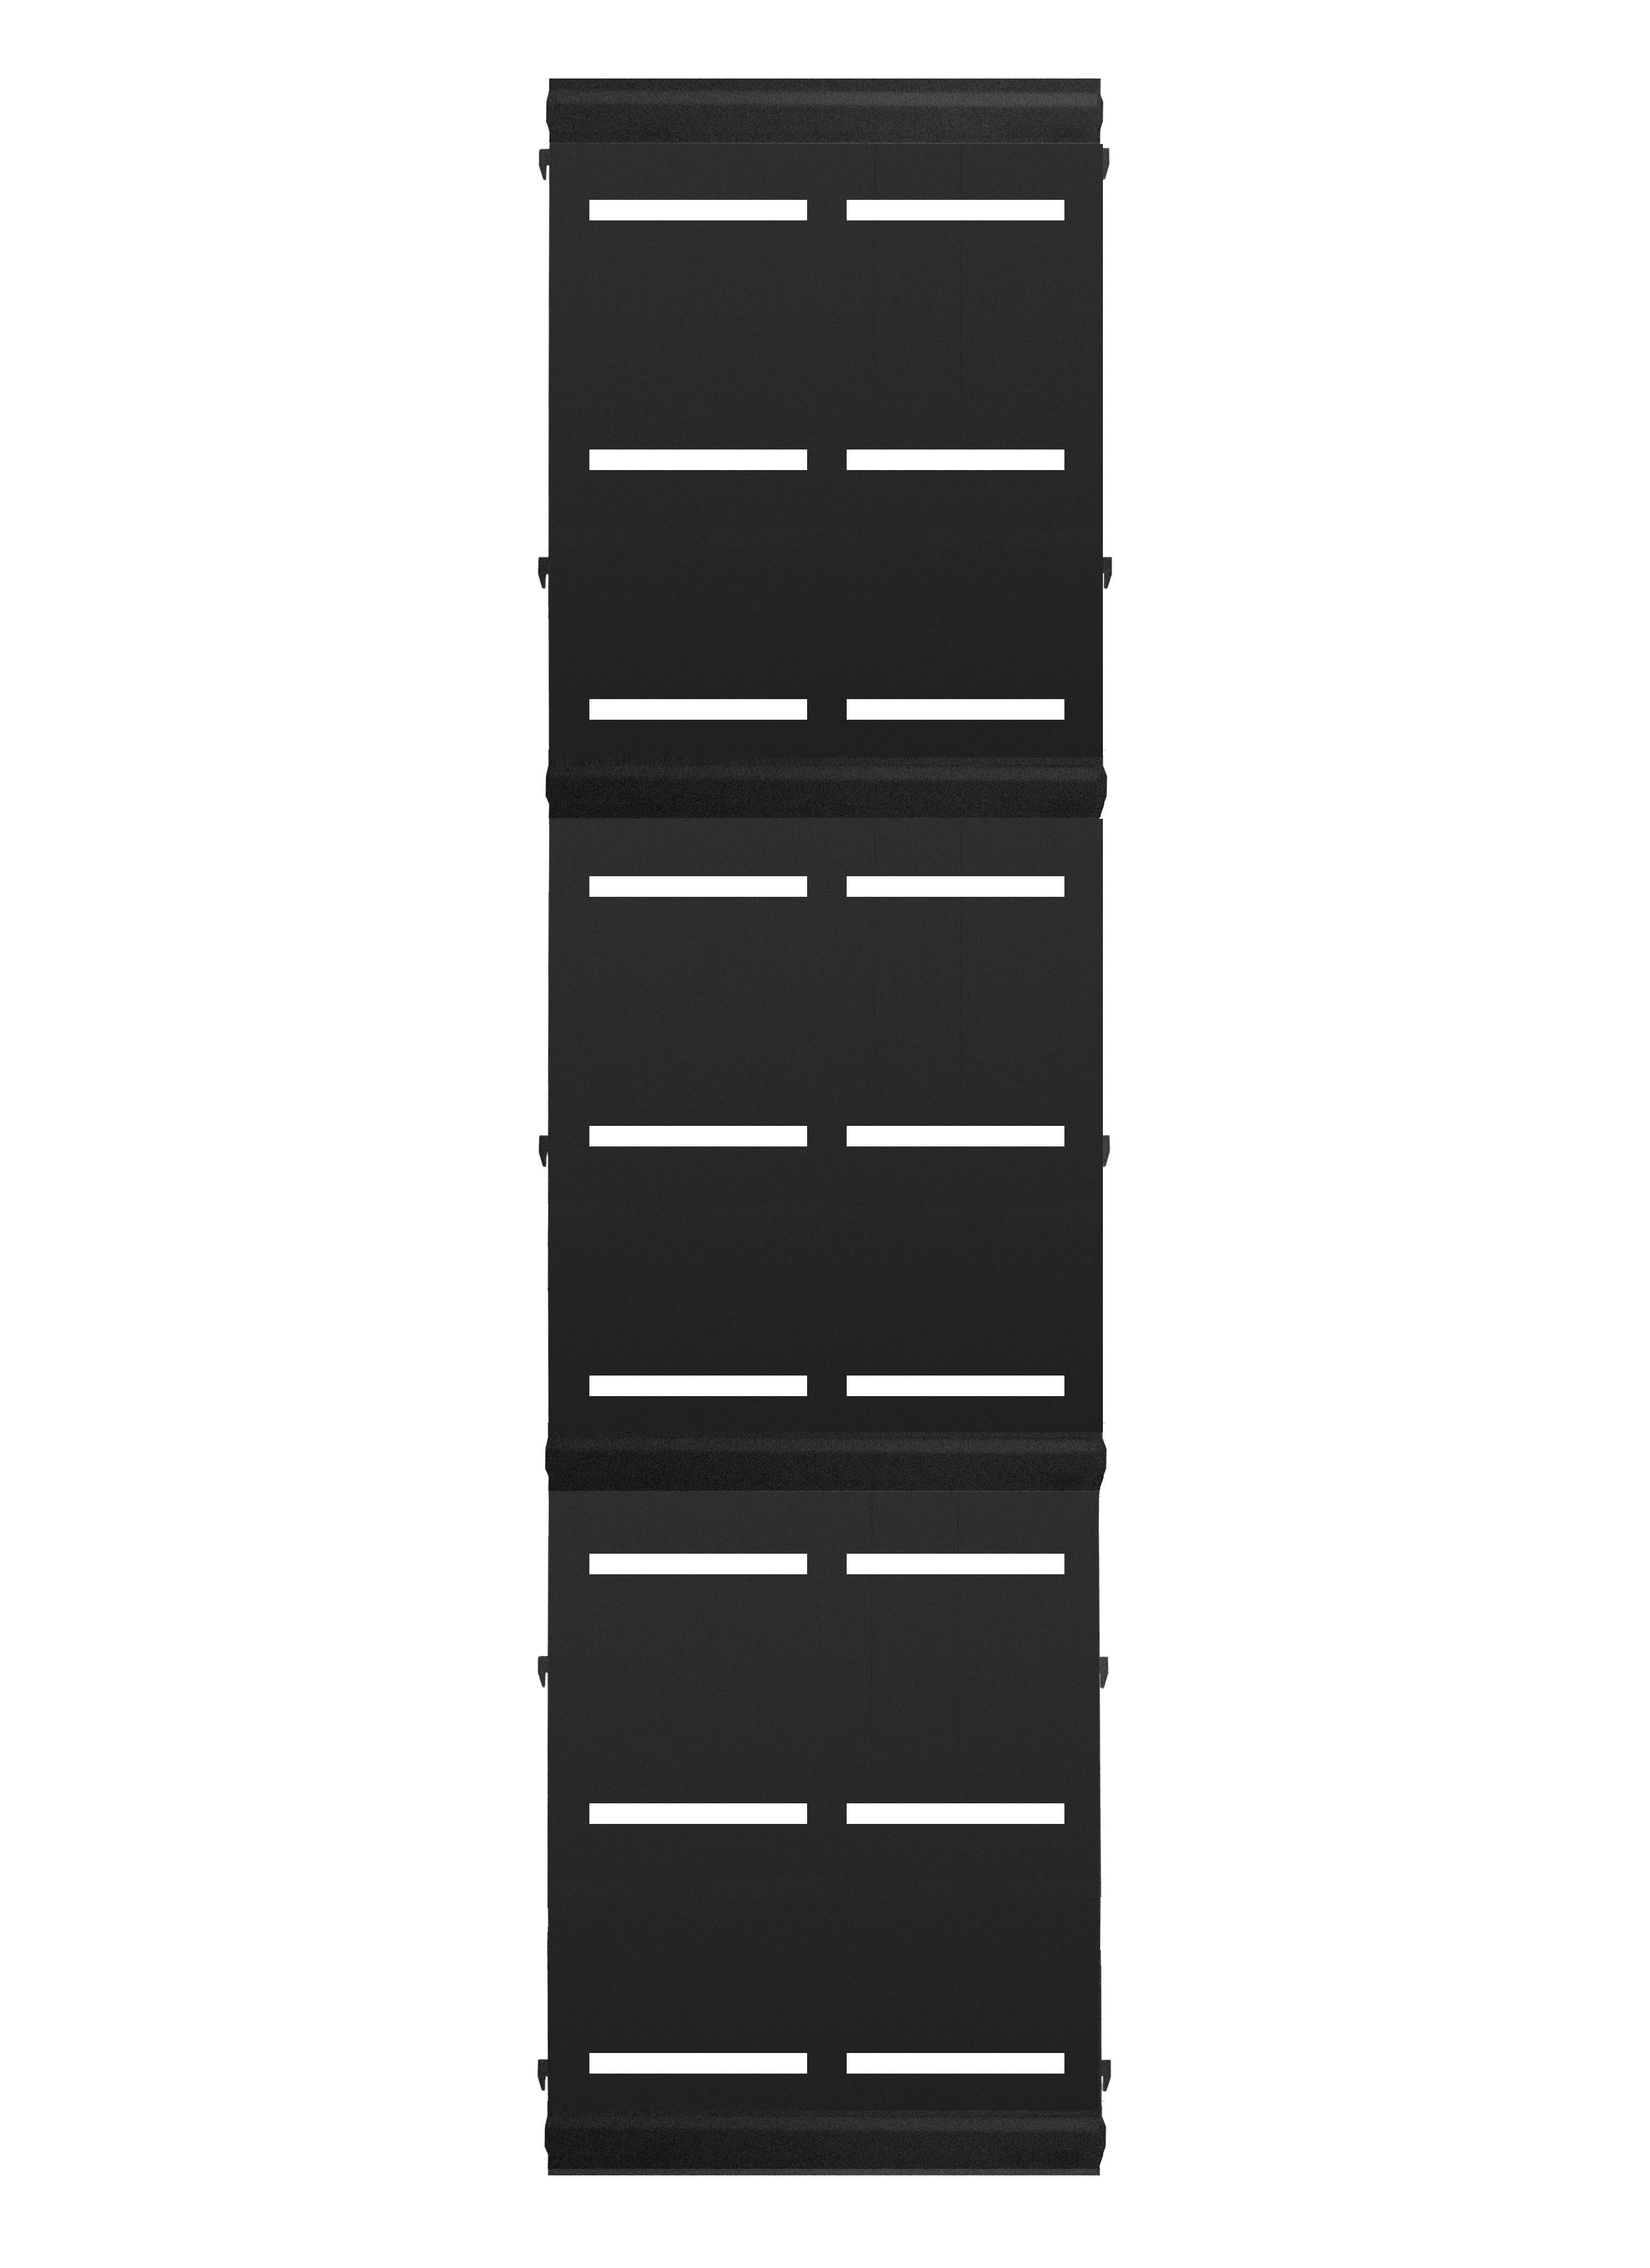 Panel remate valla acero galvanizado franja rayas negro 194x52,5 cm